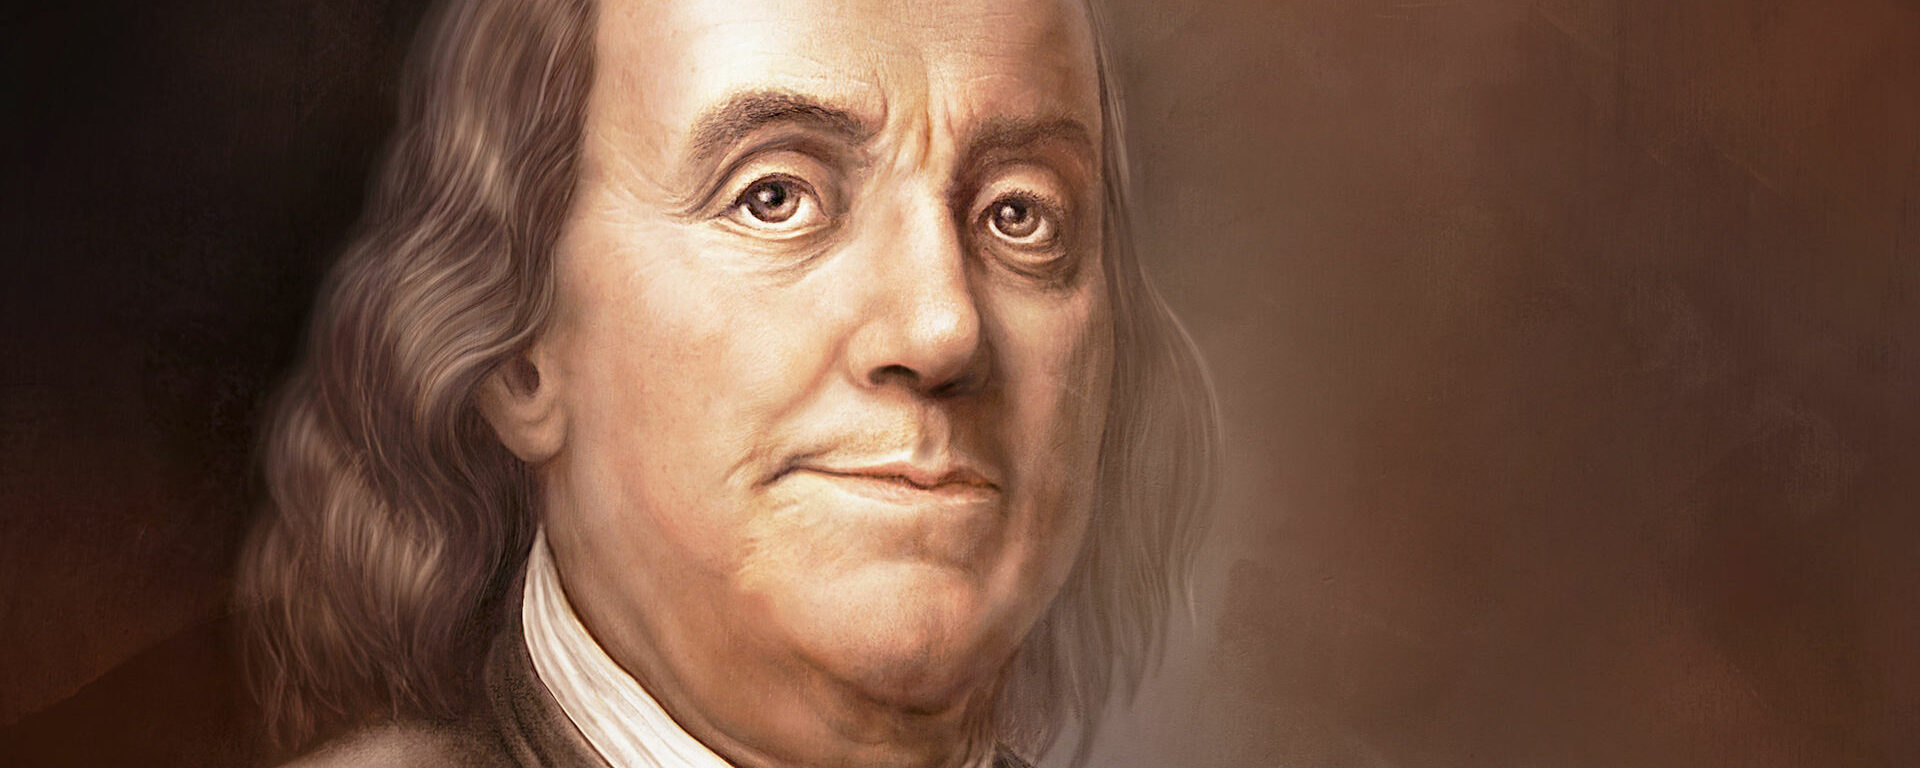 Benjamin Franklin portræt